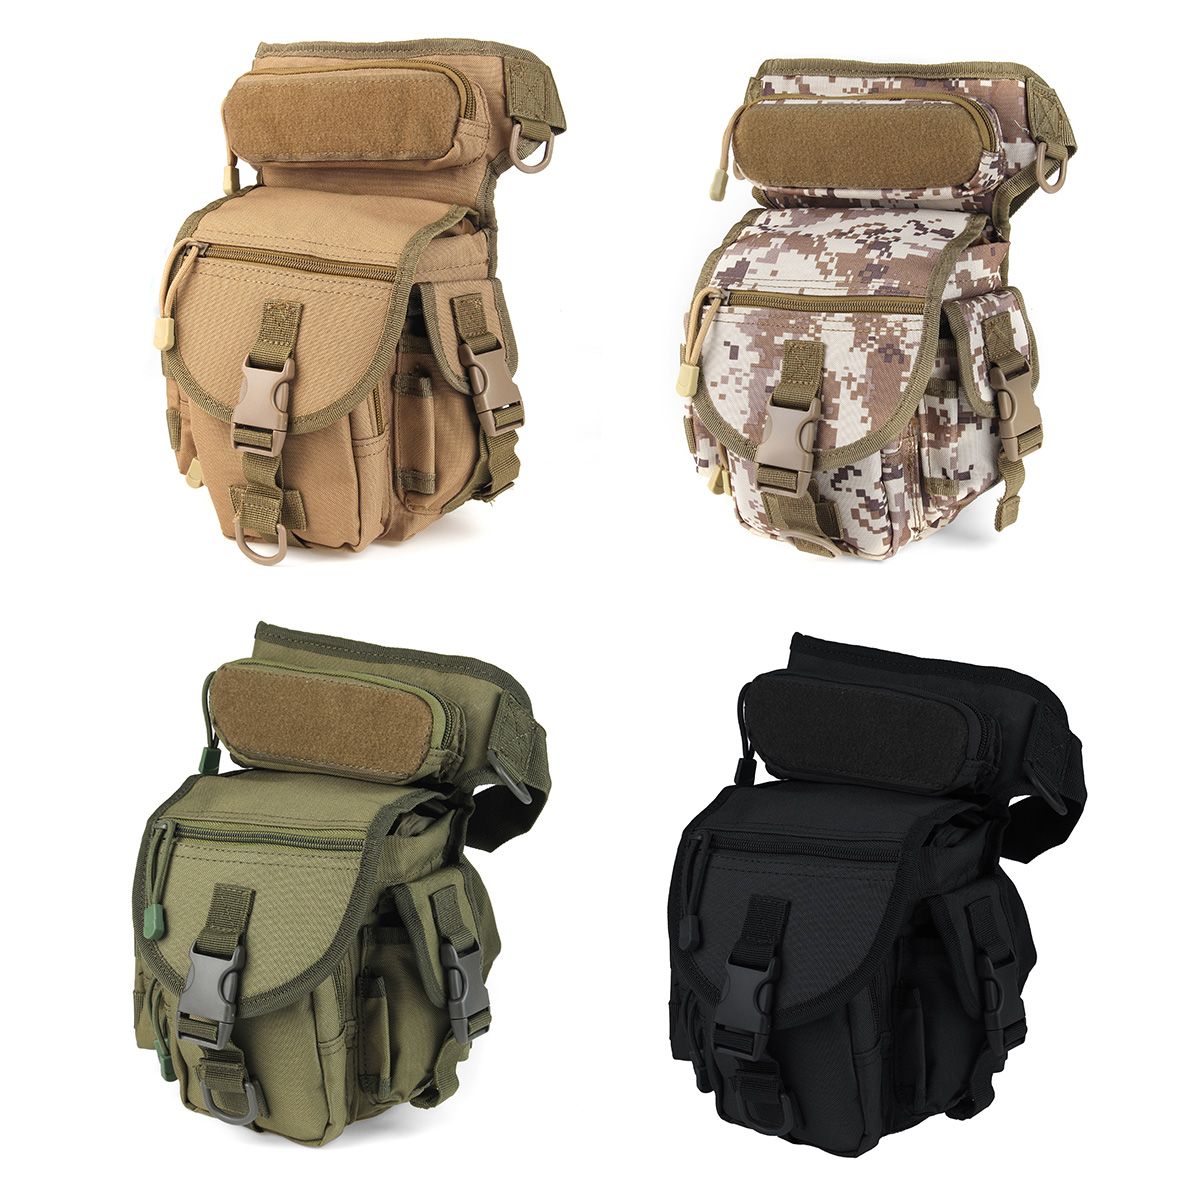 Nylon-Tactical-Waist-Bag-Military-Belt-Buckle-Pouches-Storage-Bag-Leg-Bag-Outdoor-Hunting-Climbing-1763612-1